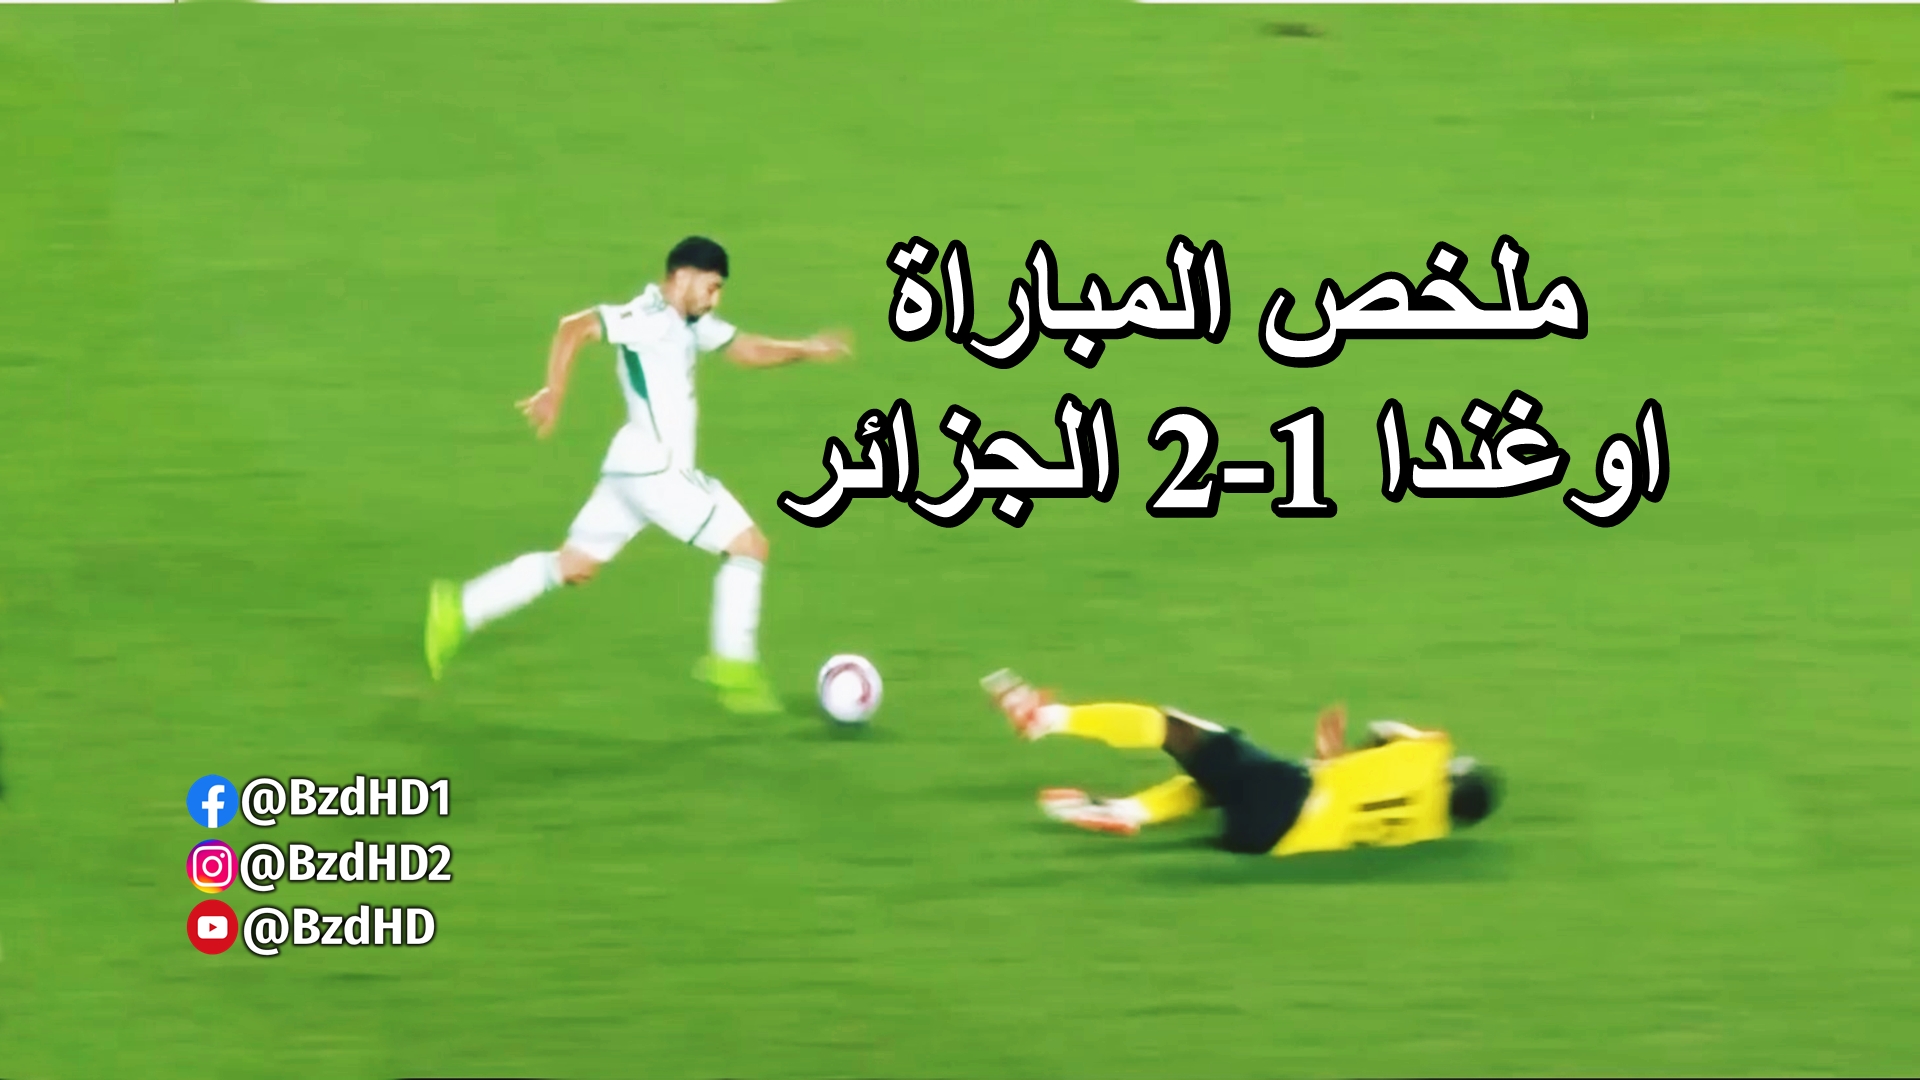 شاهد ملخص مبارة الجزائر واوغندا 2-1 - اهداف مباراة الجزائر 6